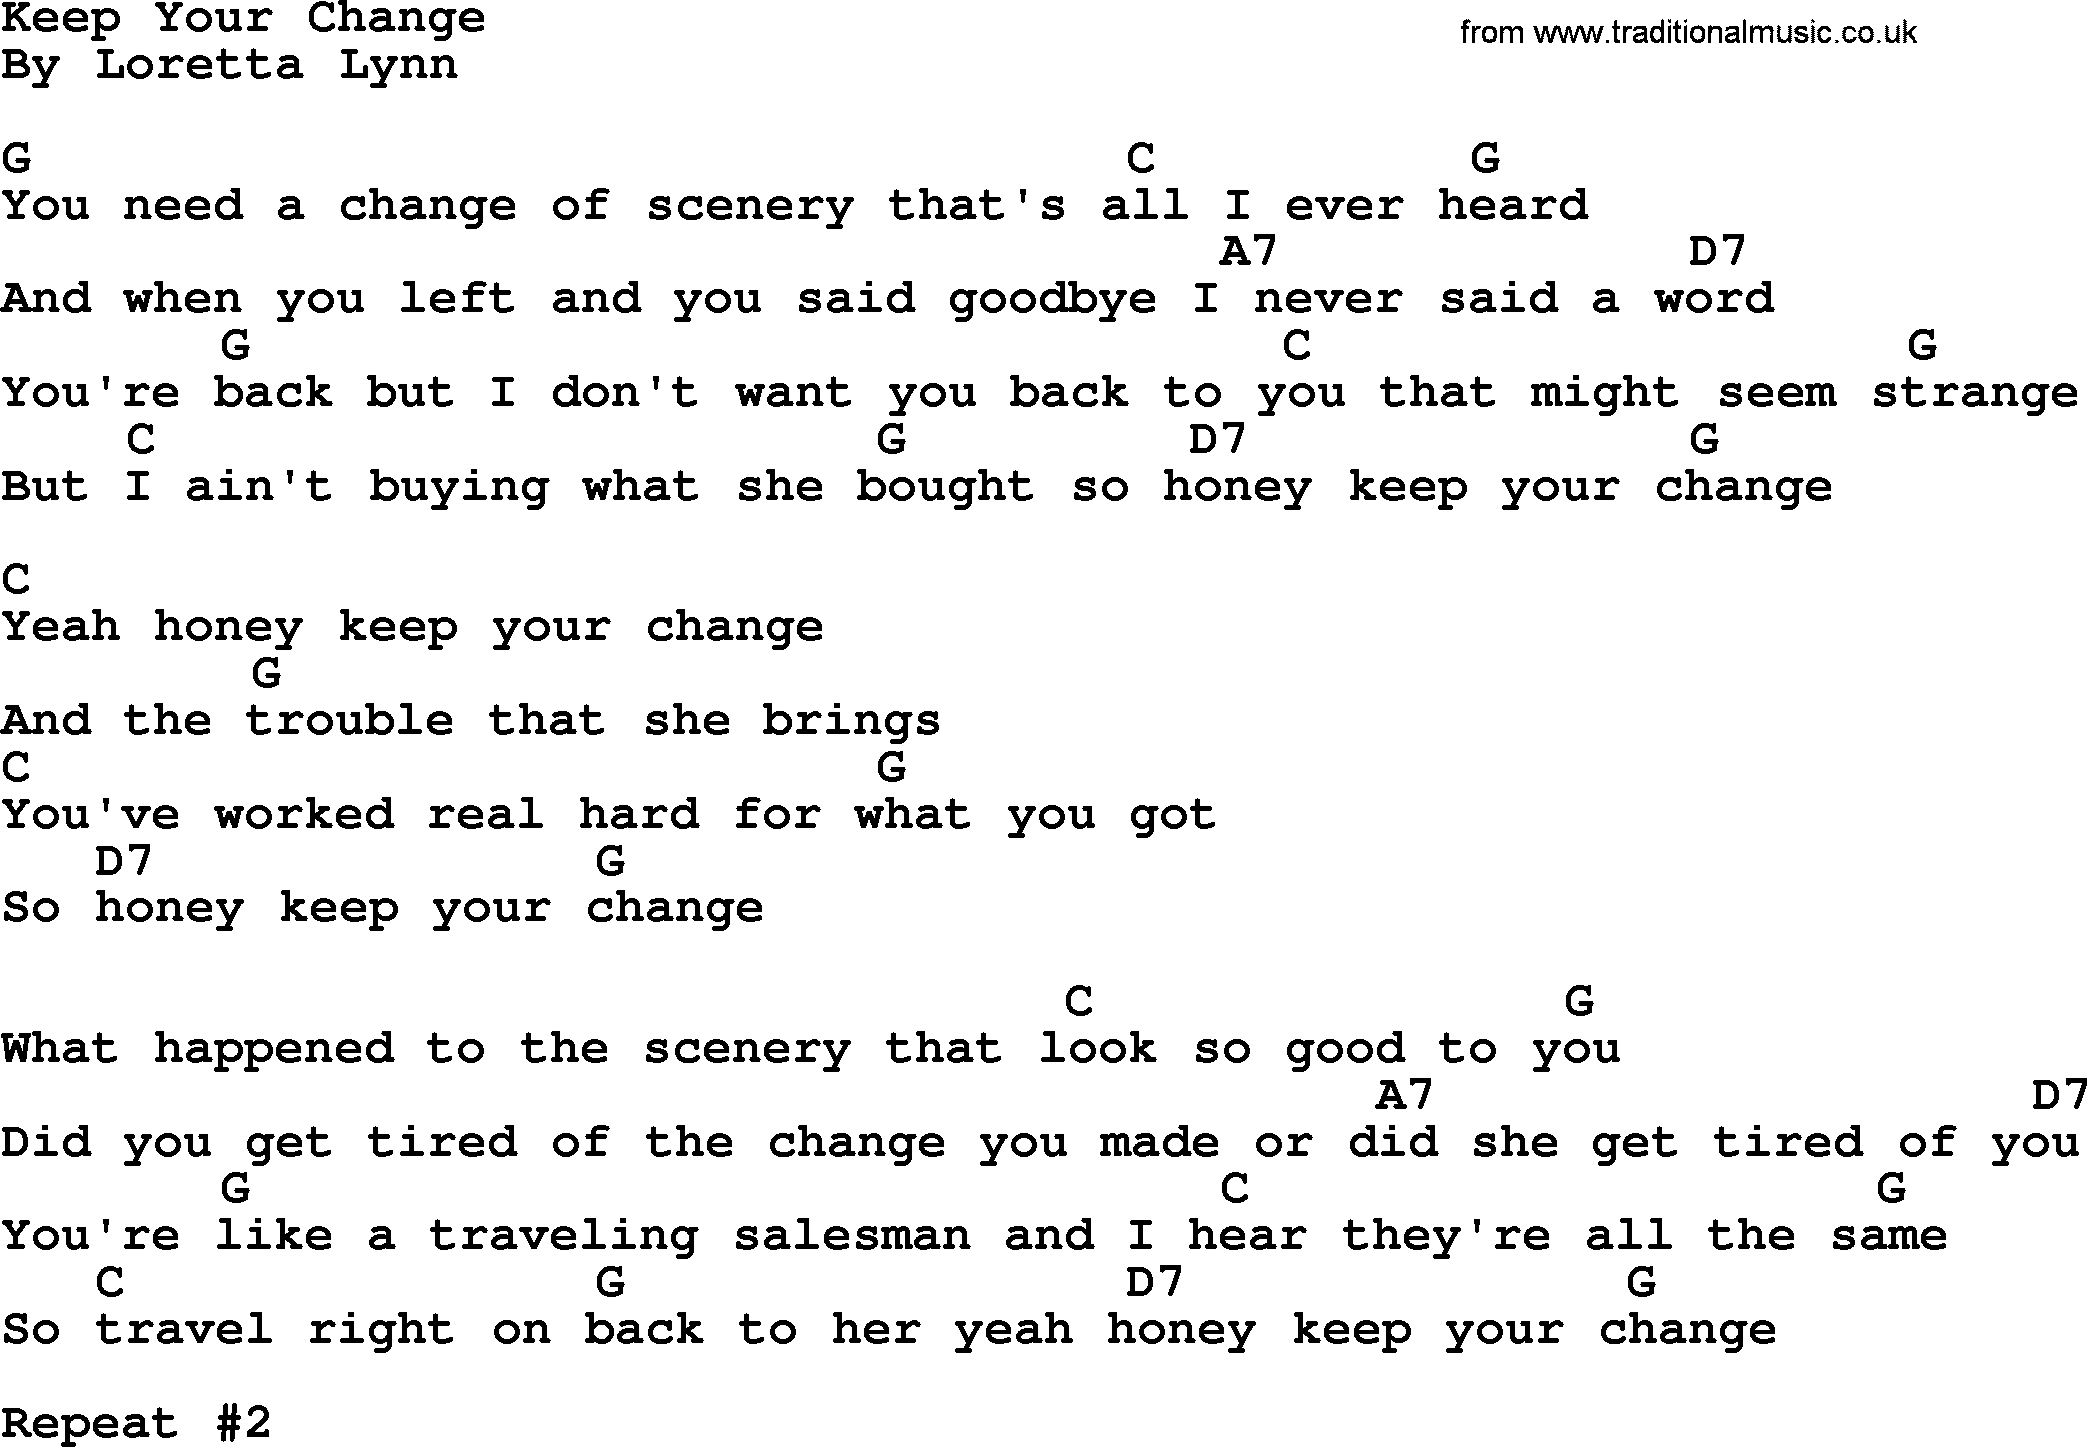 Loretta Lynn song: Keep Your Change lyrics and chords